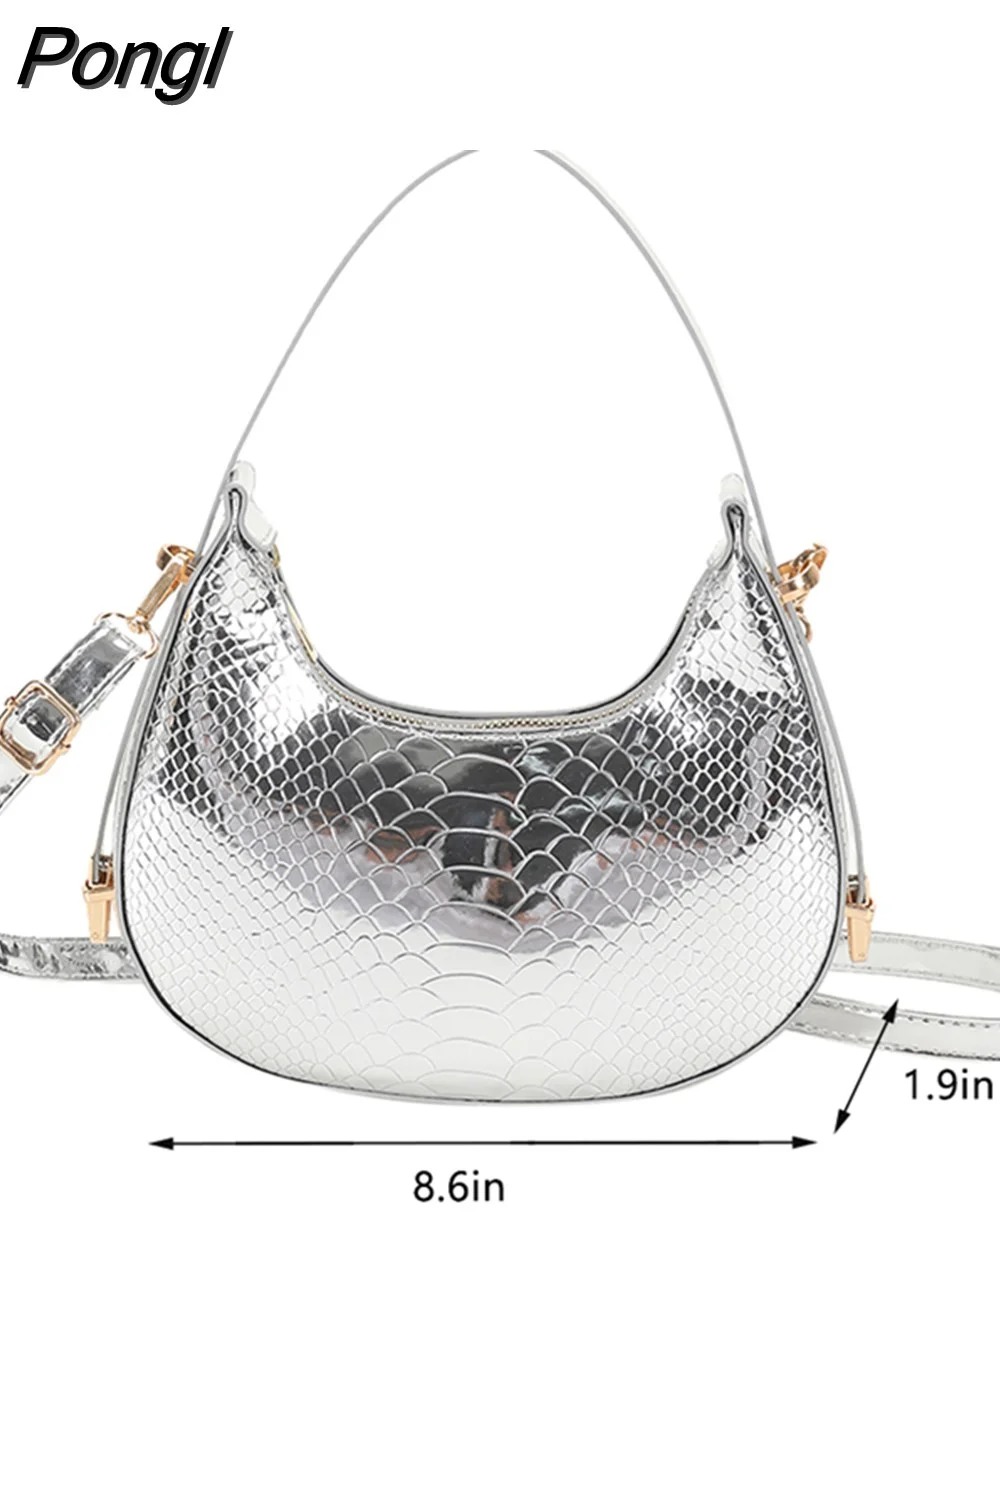 Pongl Ladies Messenger Bags Fashion Alligator Pattern Small Handbags Women Shoulder Bags PU Leather Casual Female Crossbody Bags